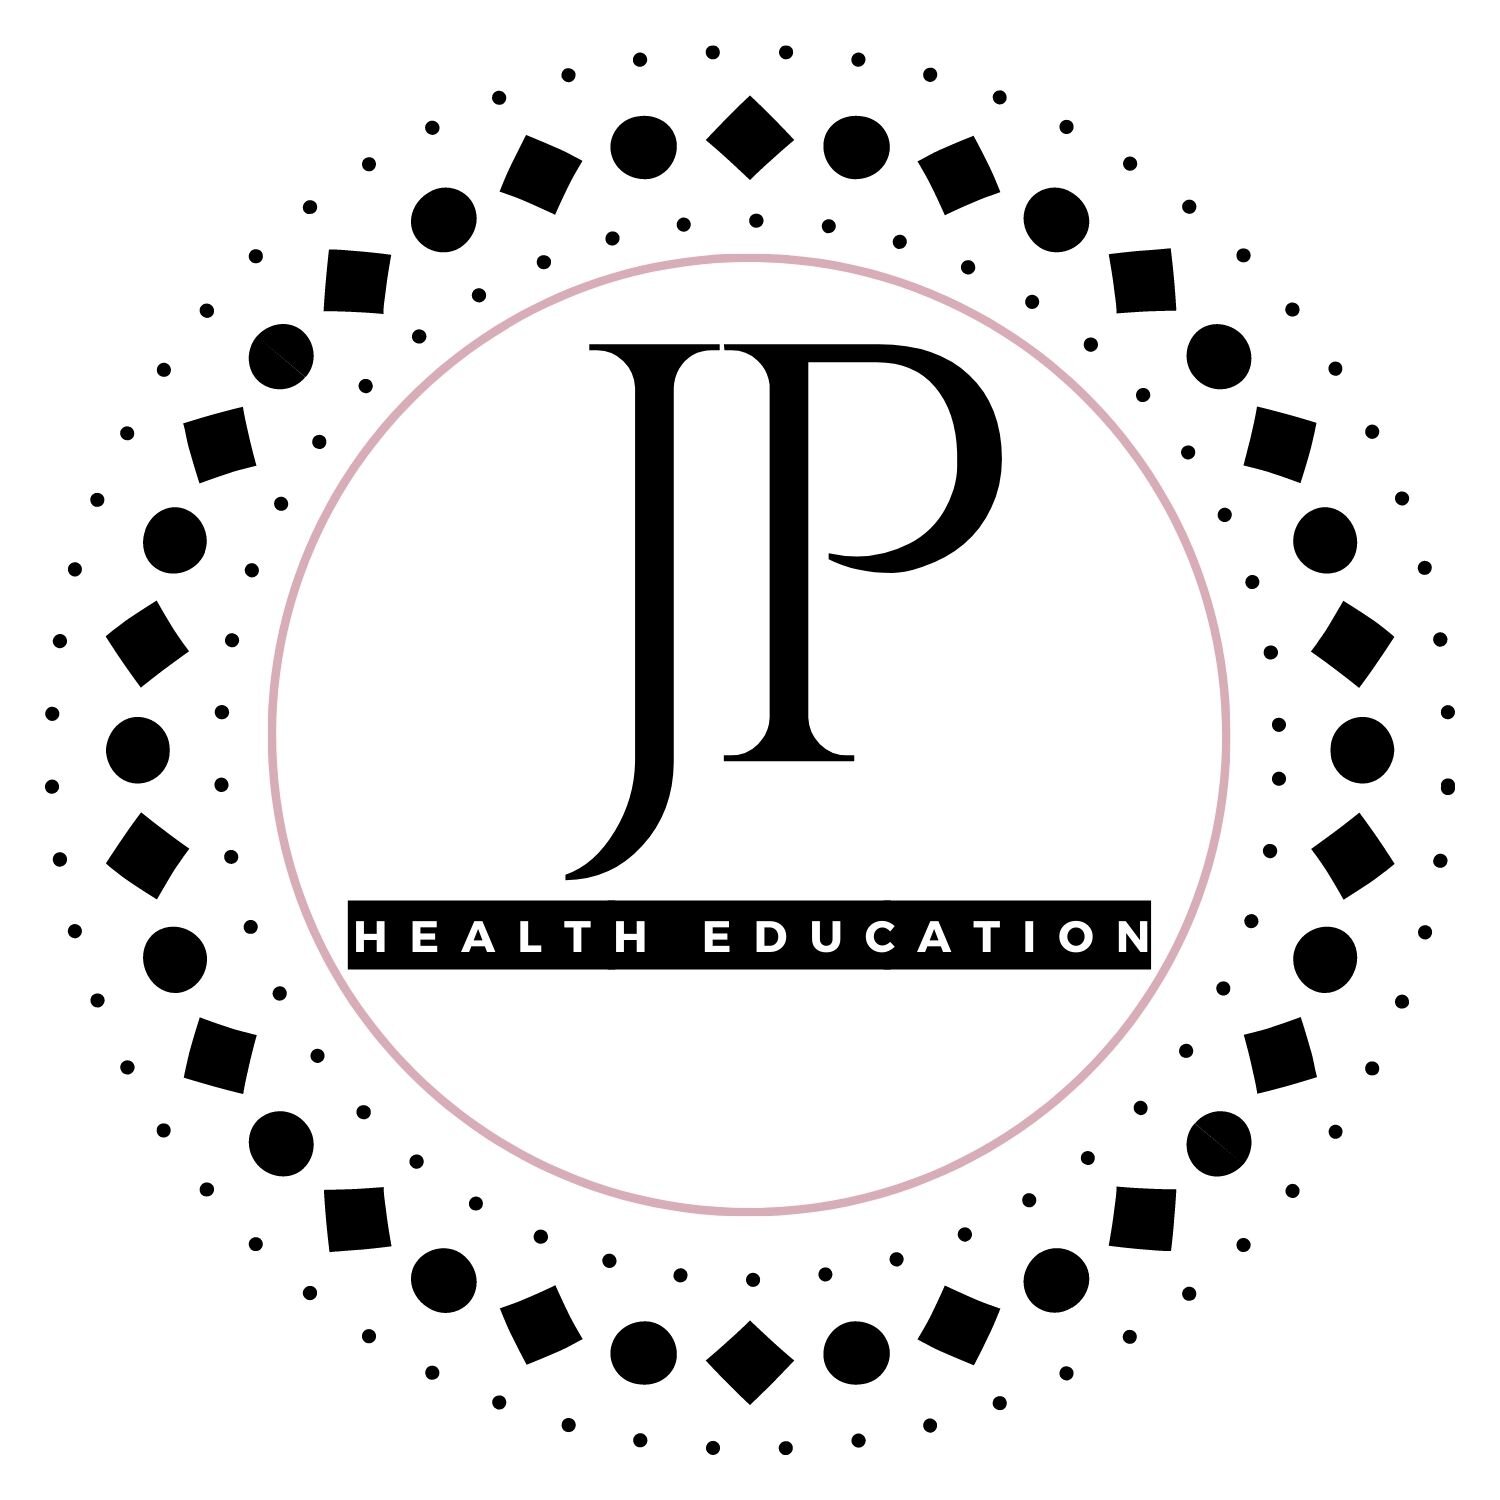 JP HEALTH EDUCATION